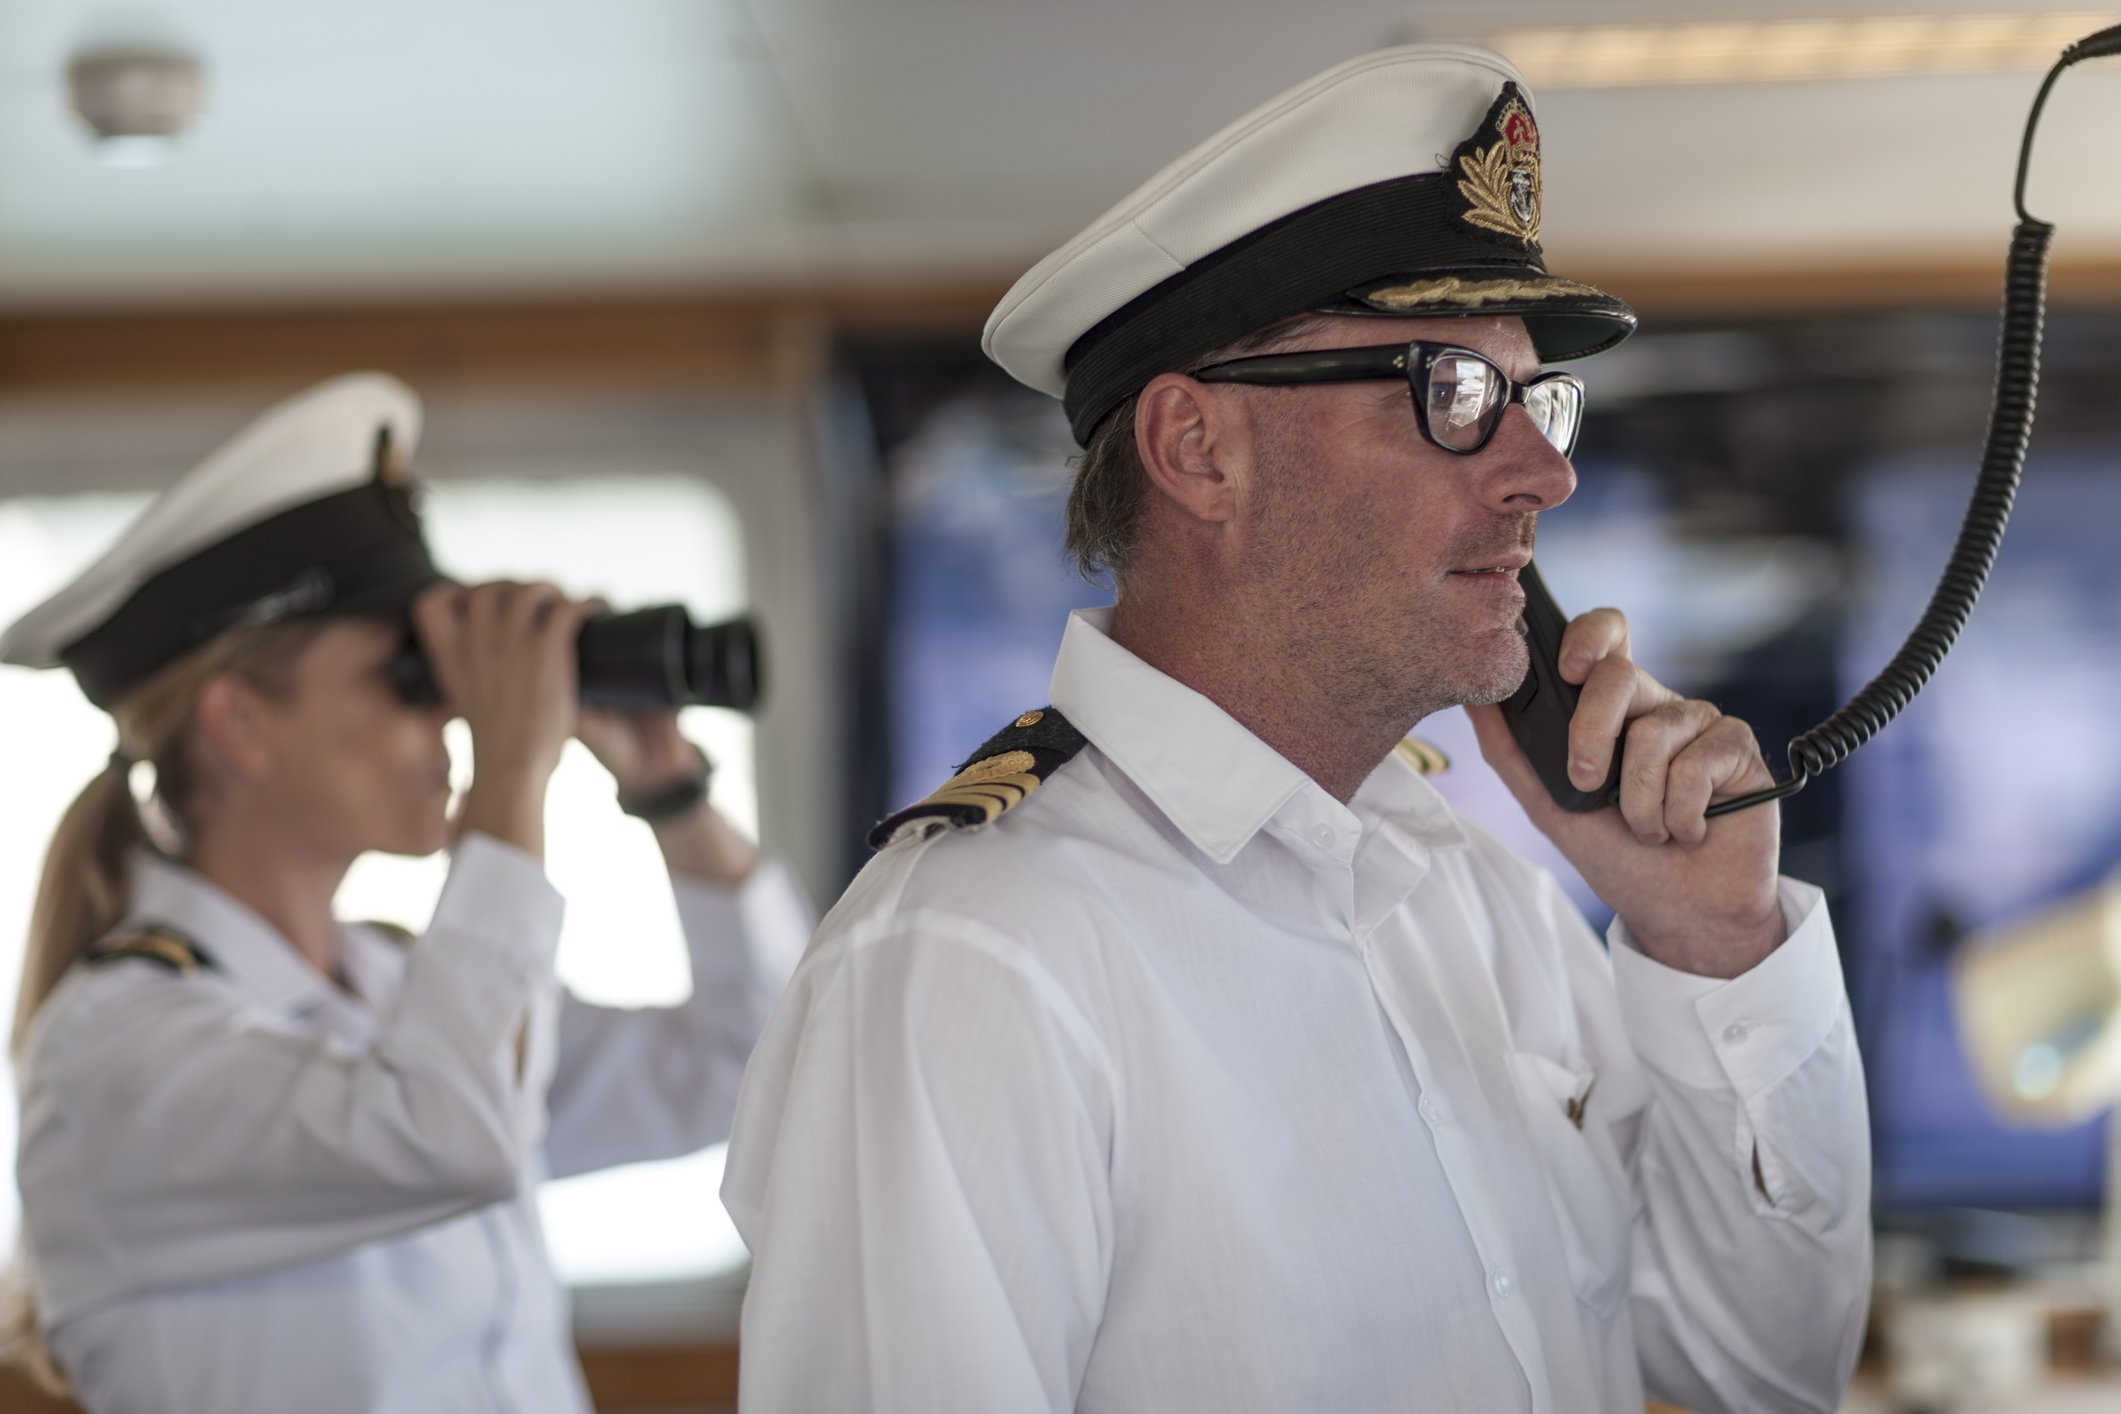 Ship captain on bridge talking on radio | Photo: Getty Images